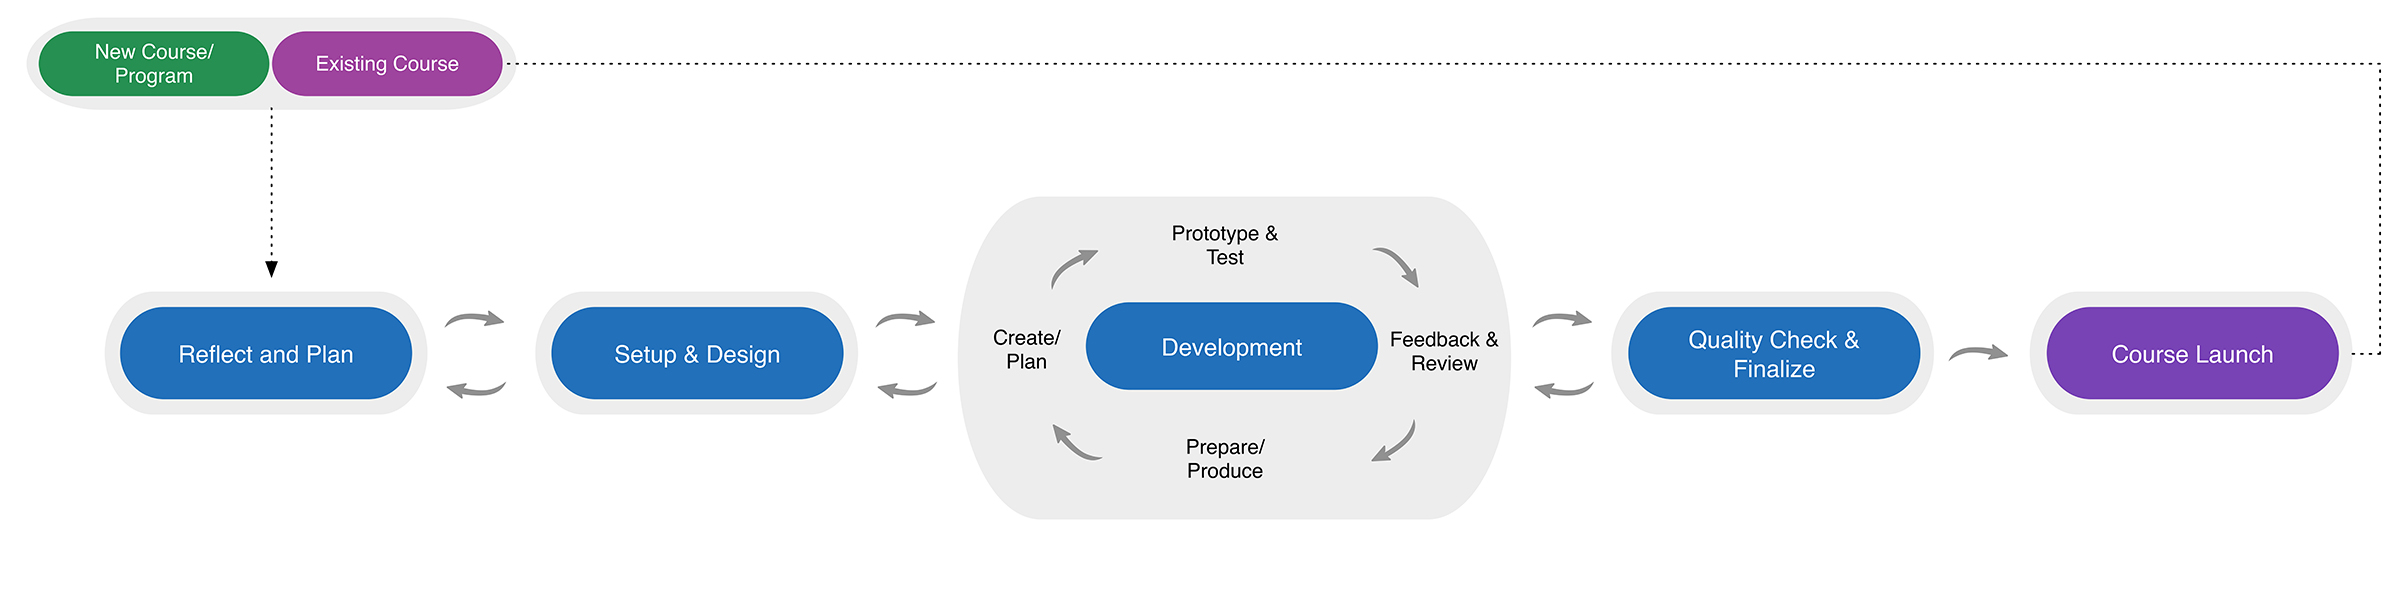 EPD Course Design and Development Process